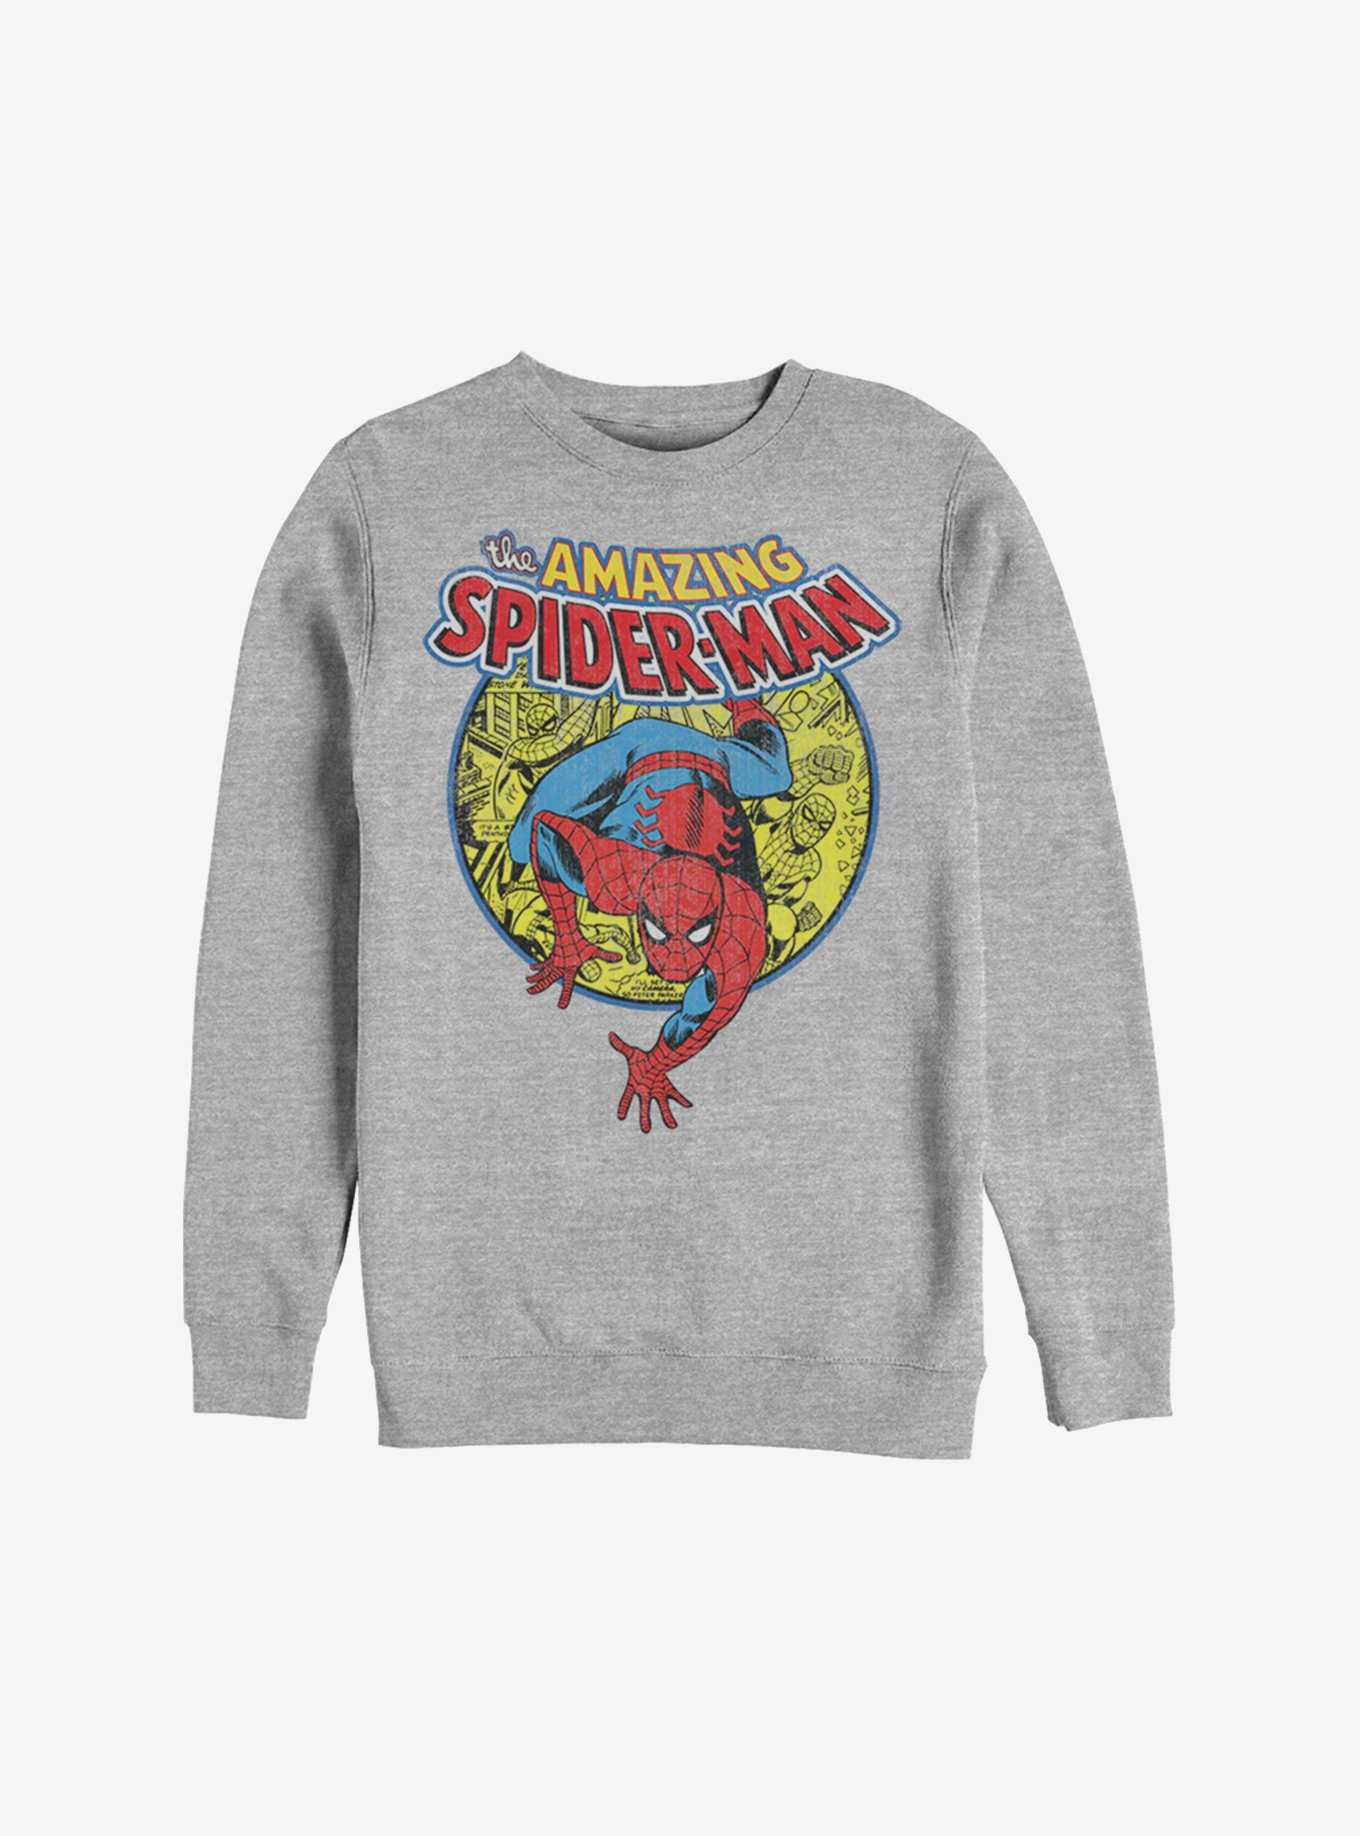 Marvel Spider-Man Urban Hero Sweatshirt, , hi-res